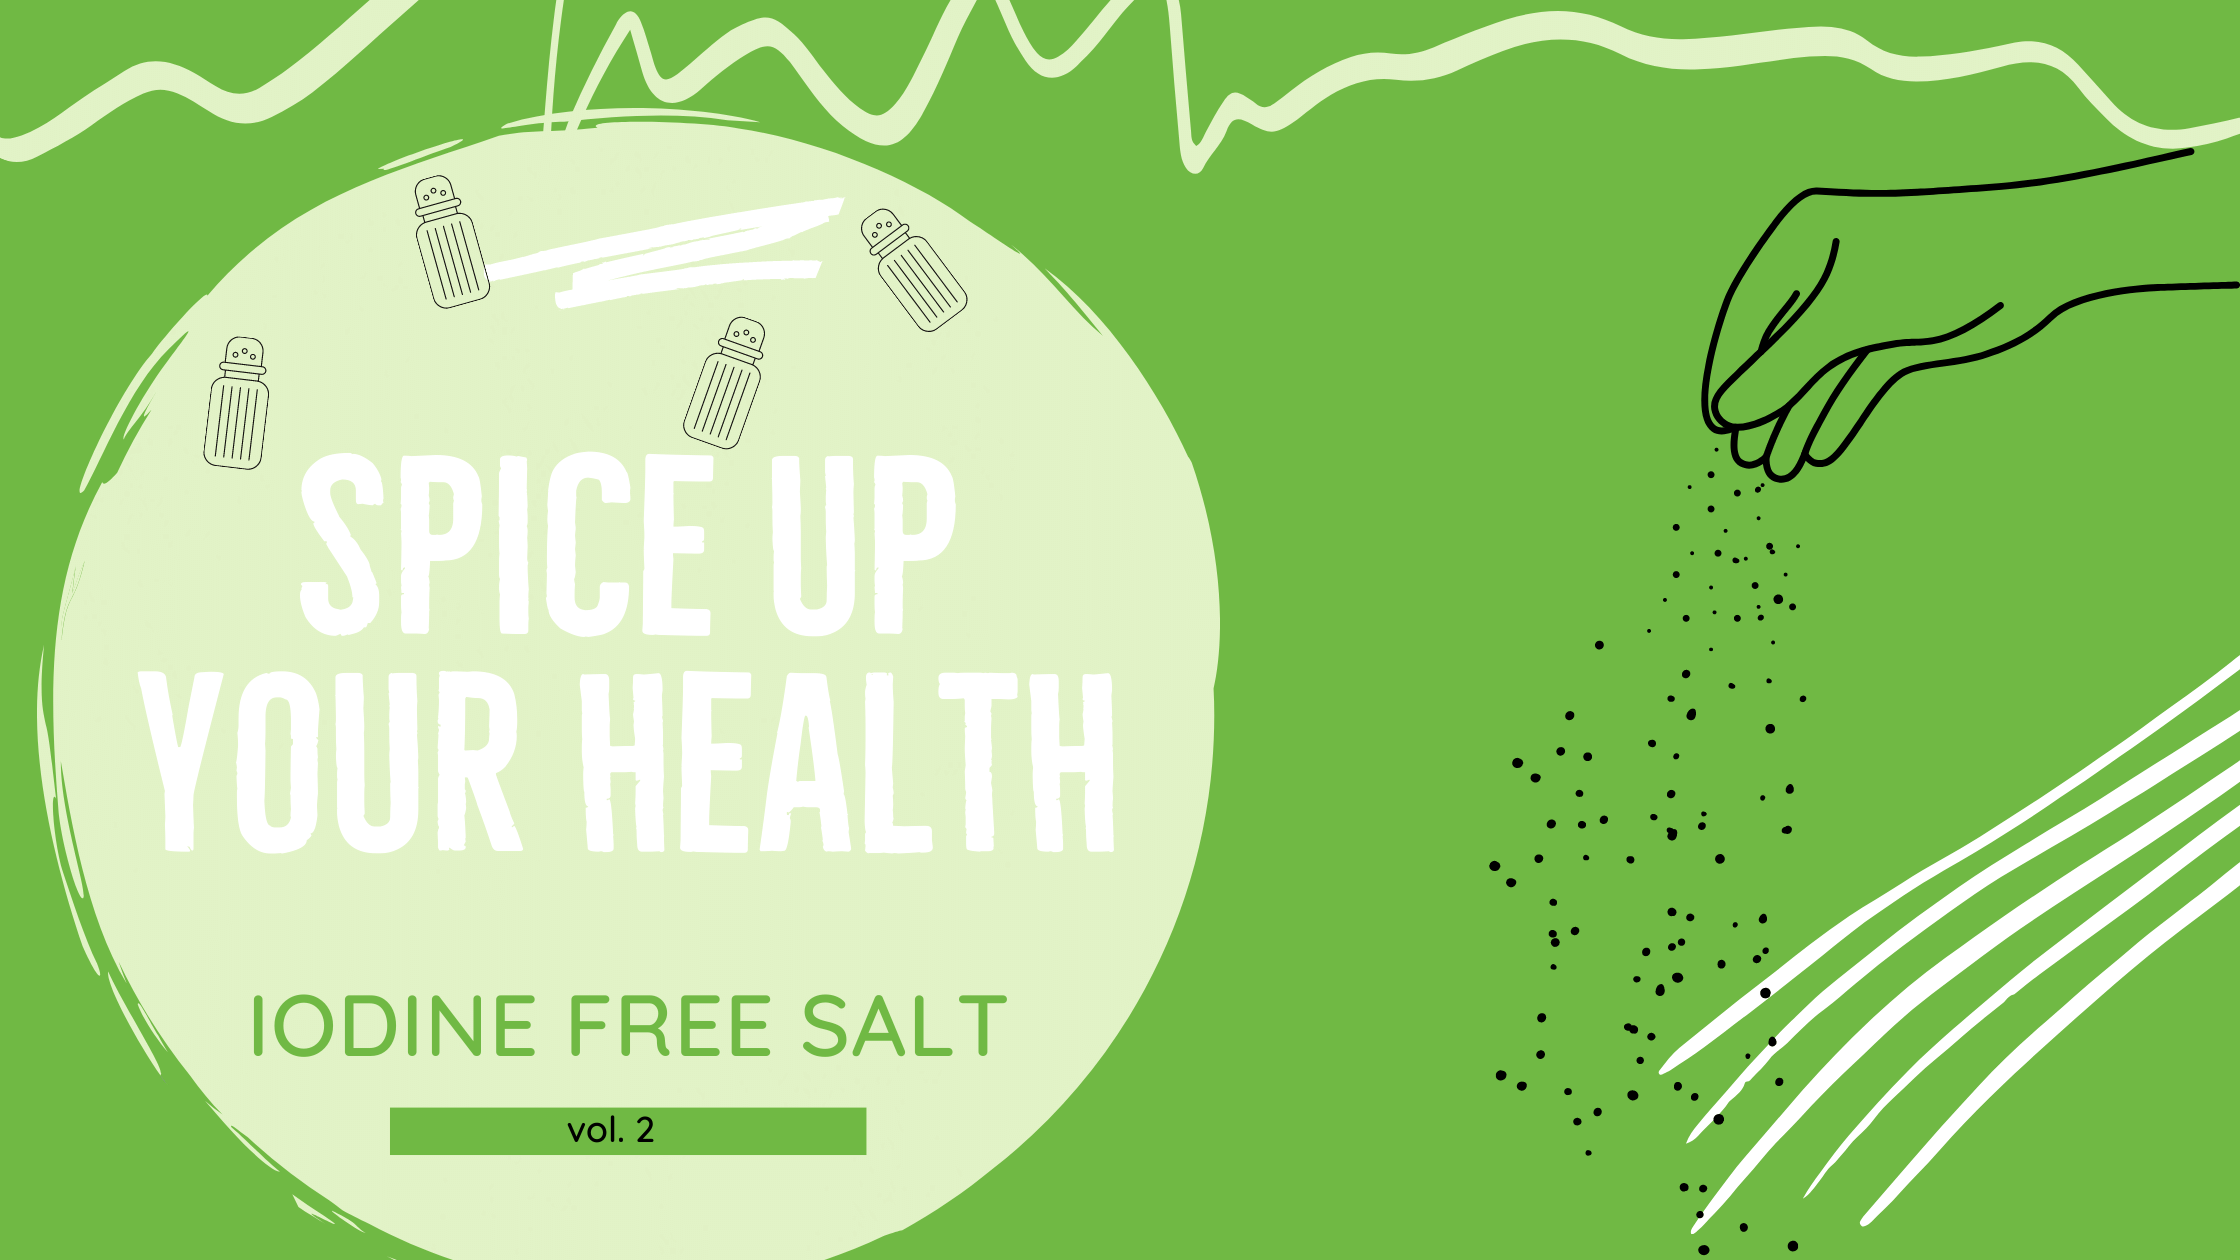 freshjax organic spices iodine free salt health benefits